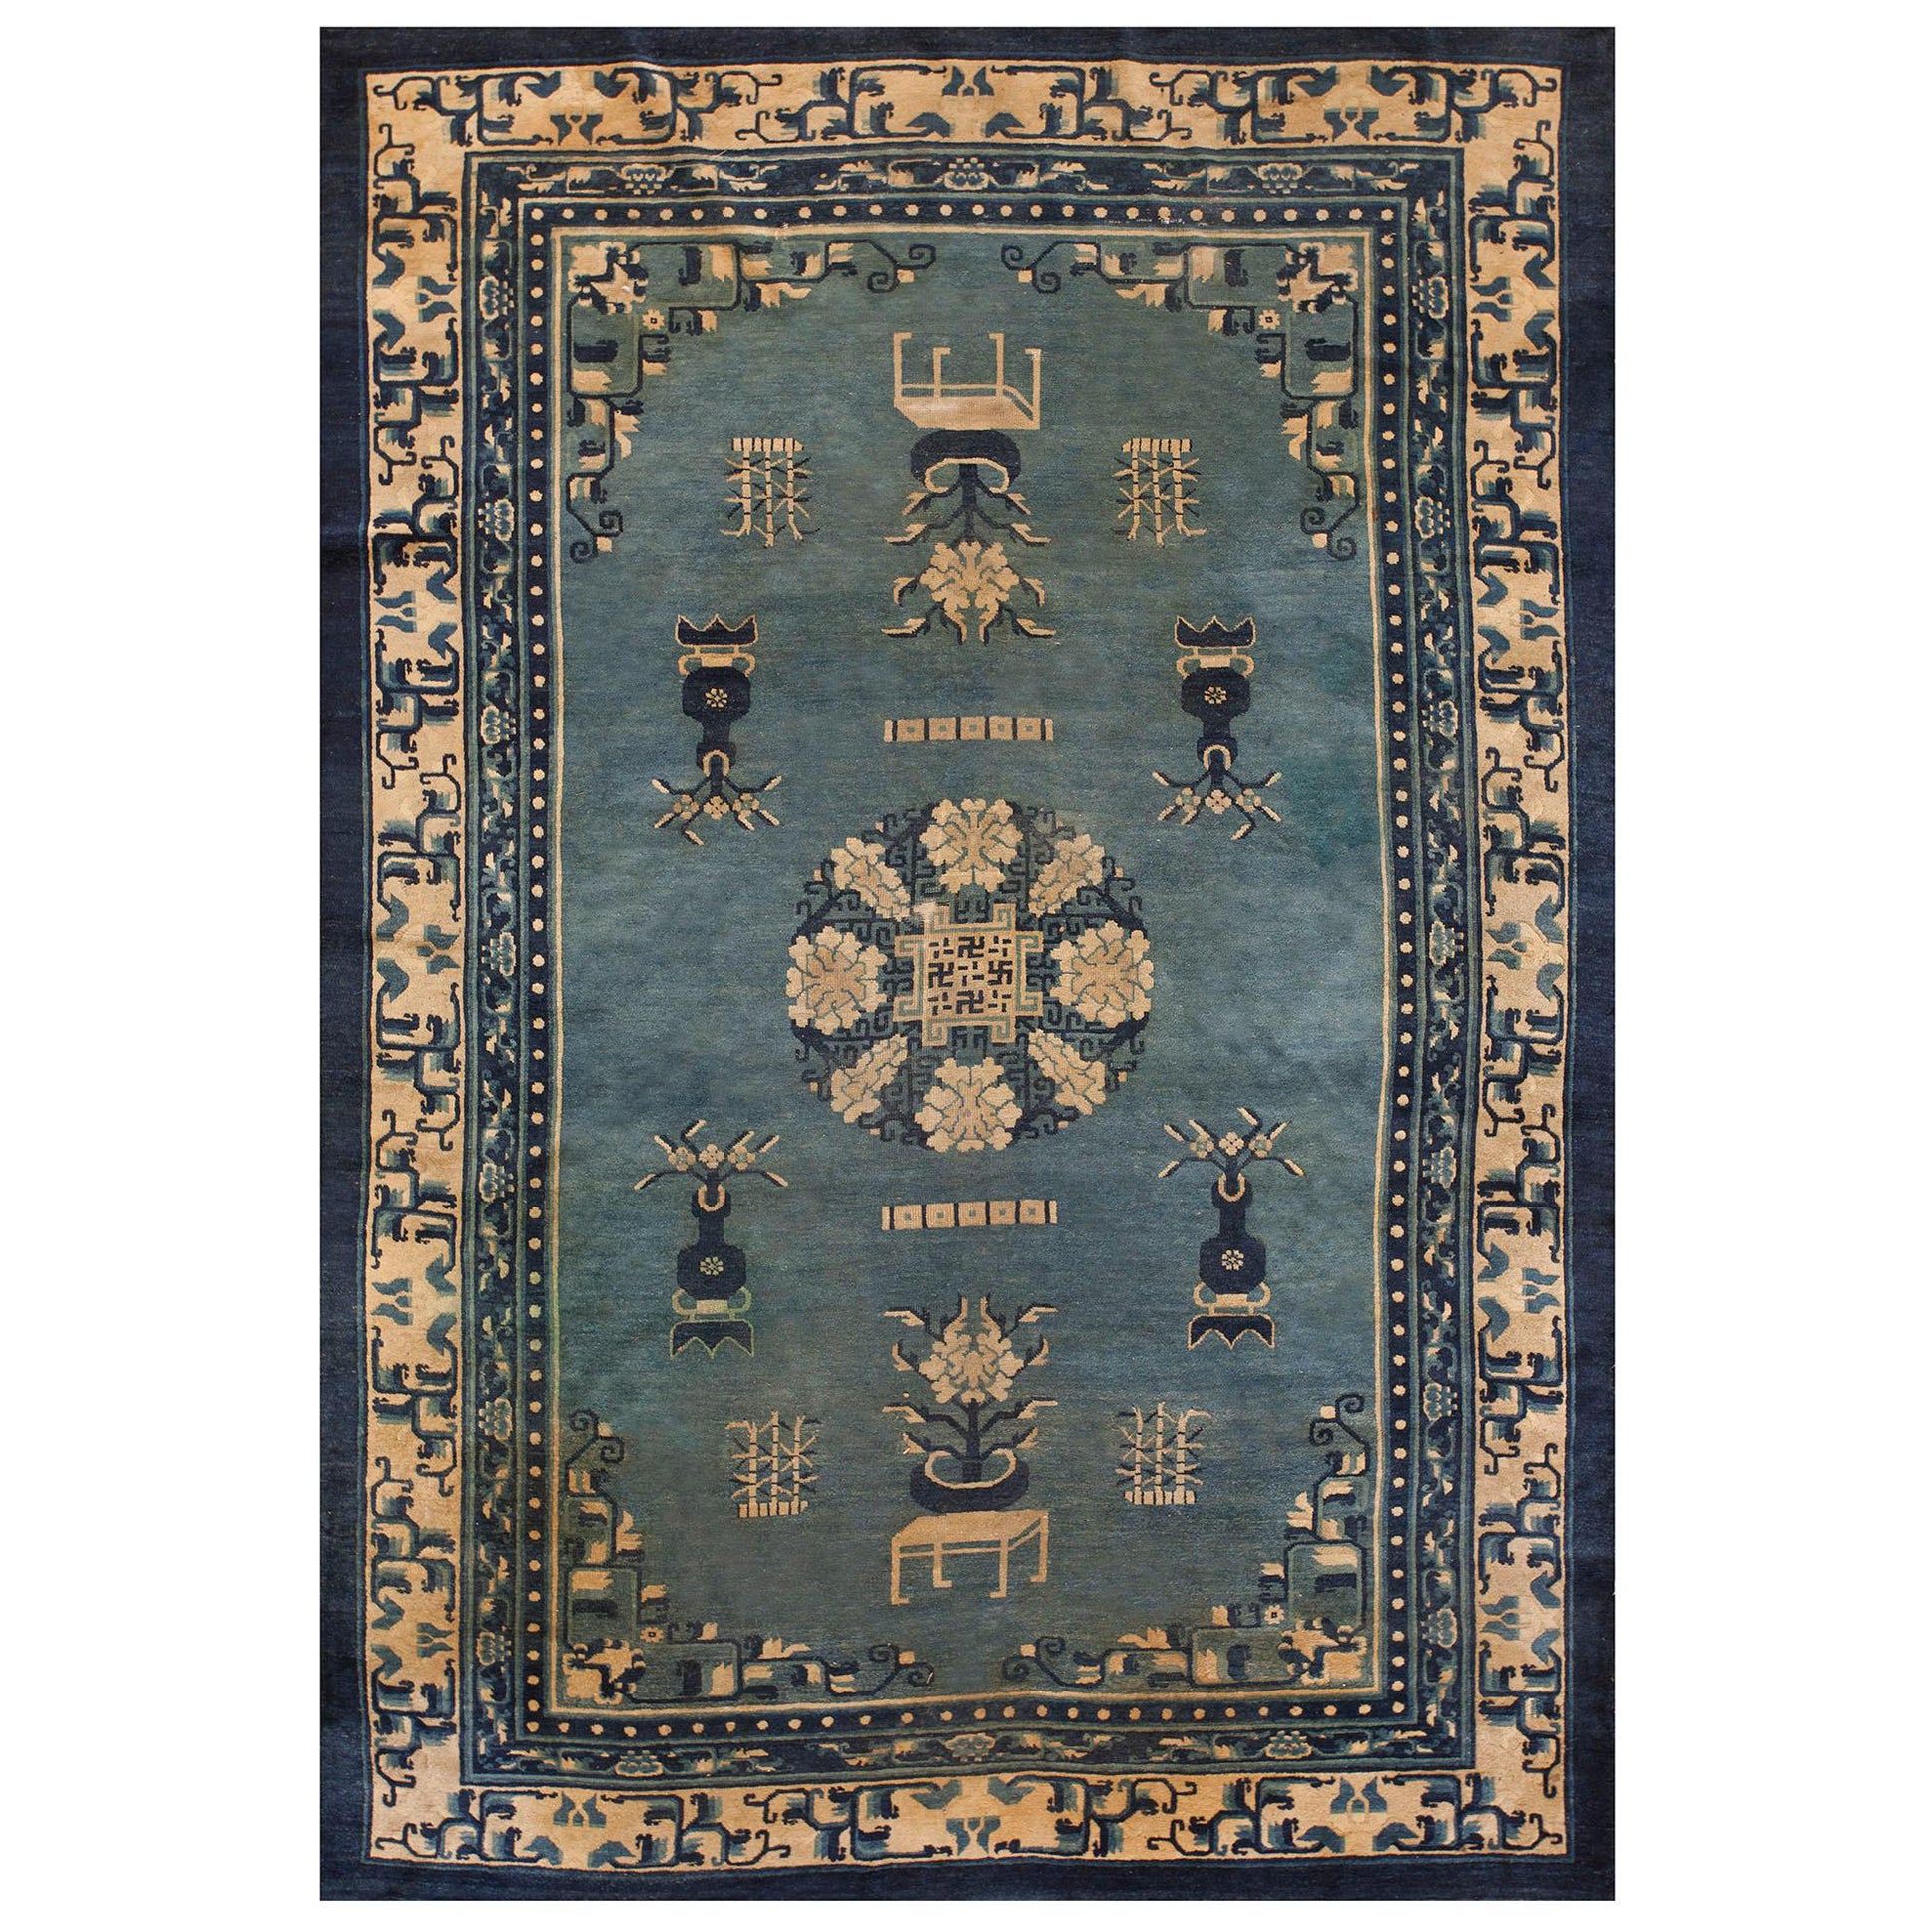 19th Century Chinese Peking Carpet ( 6' x 9' - 183 x 275 )  